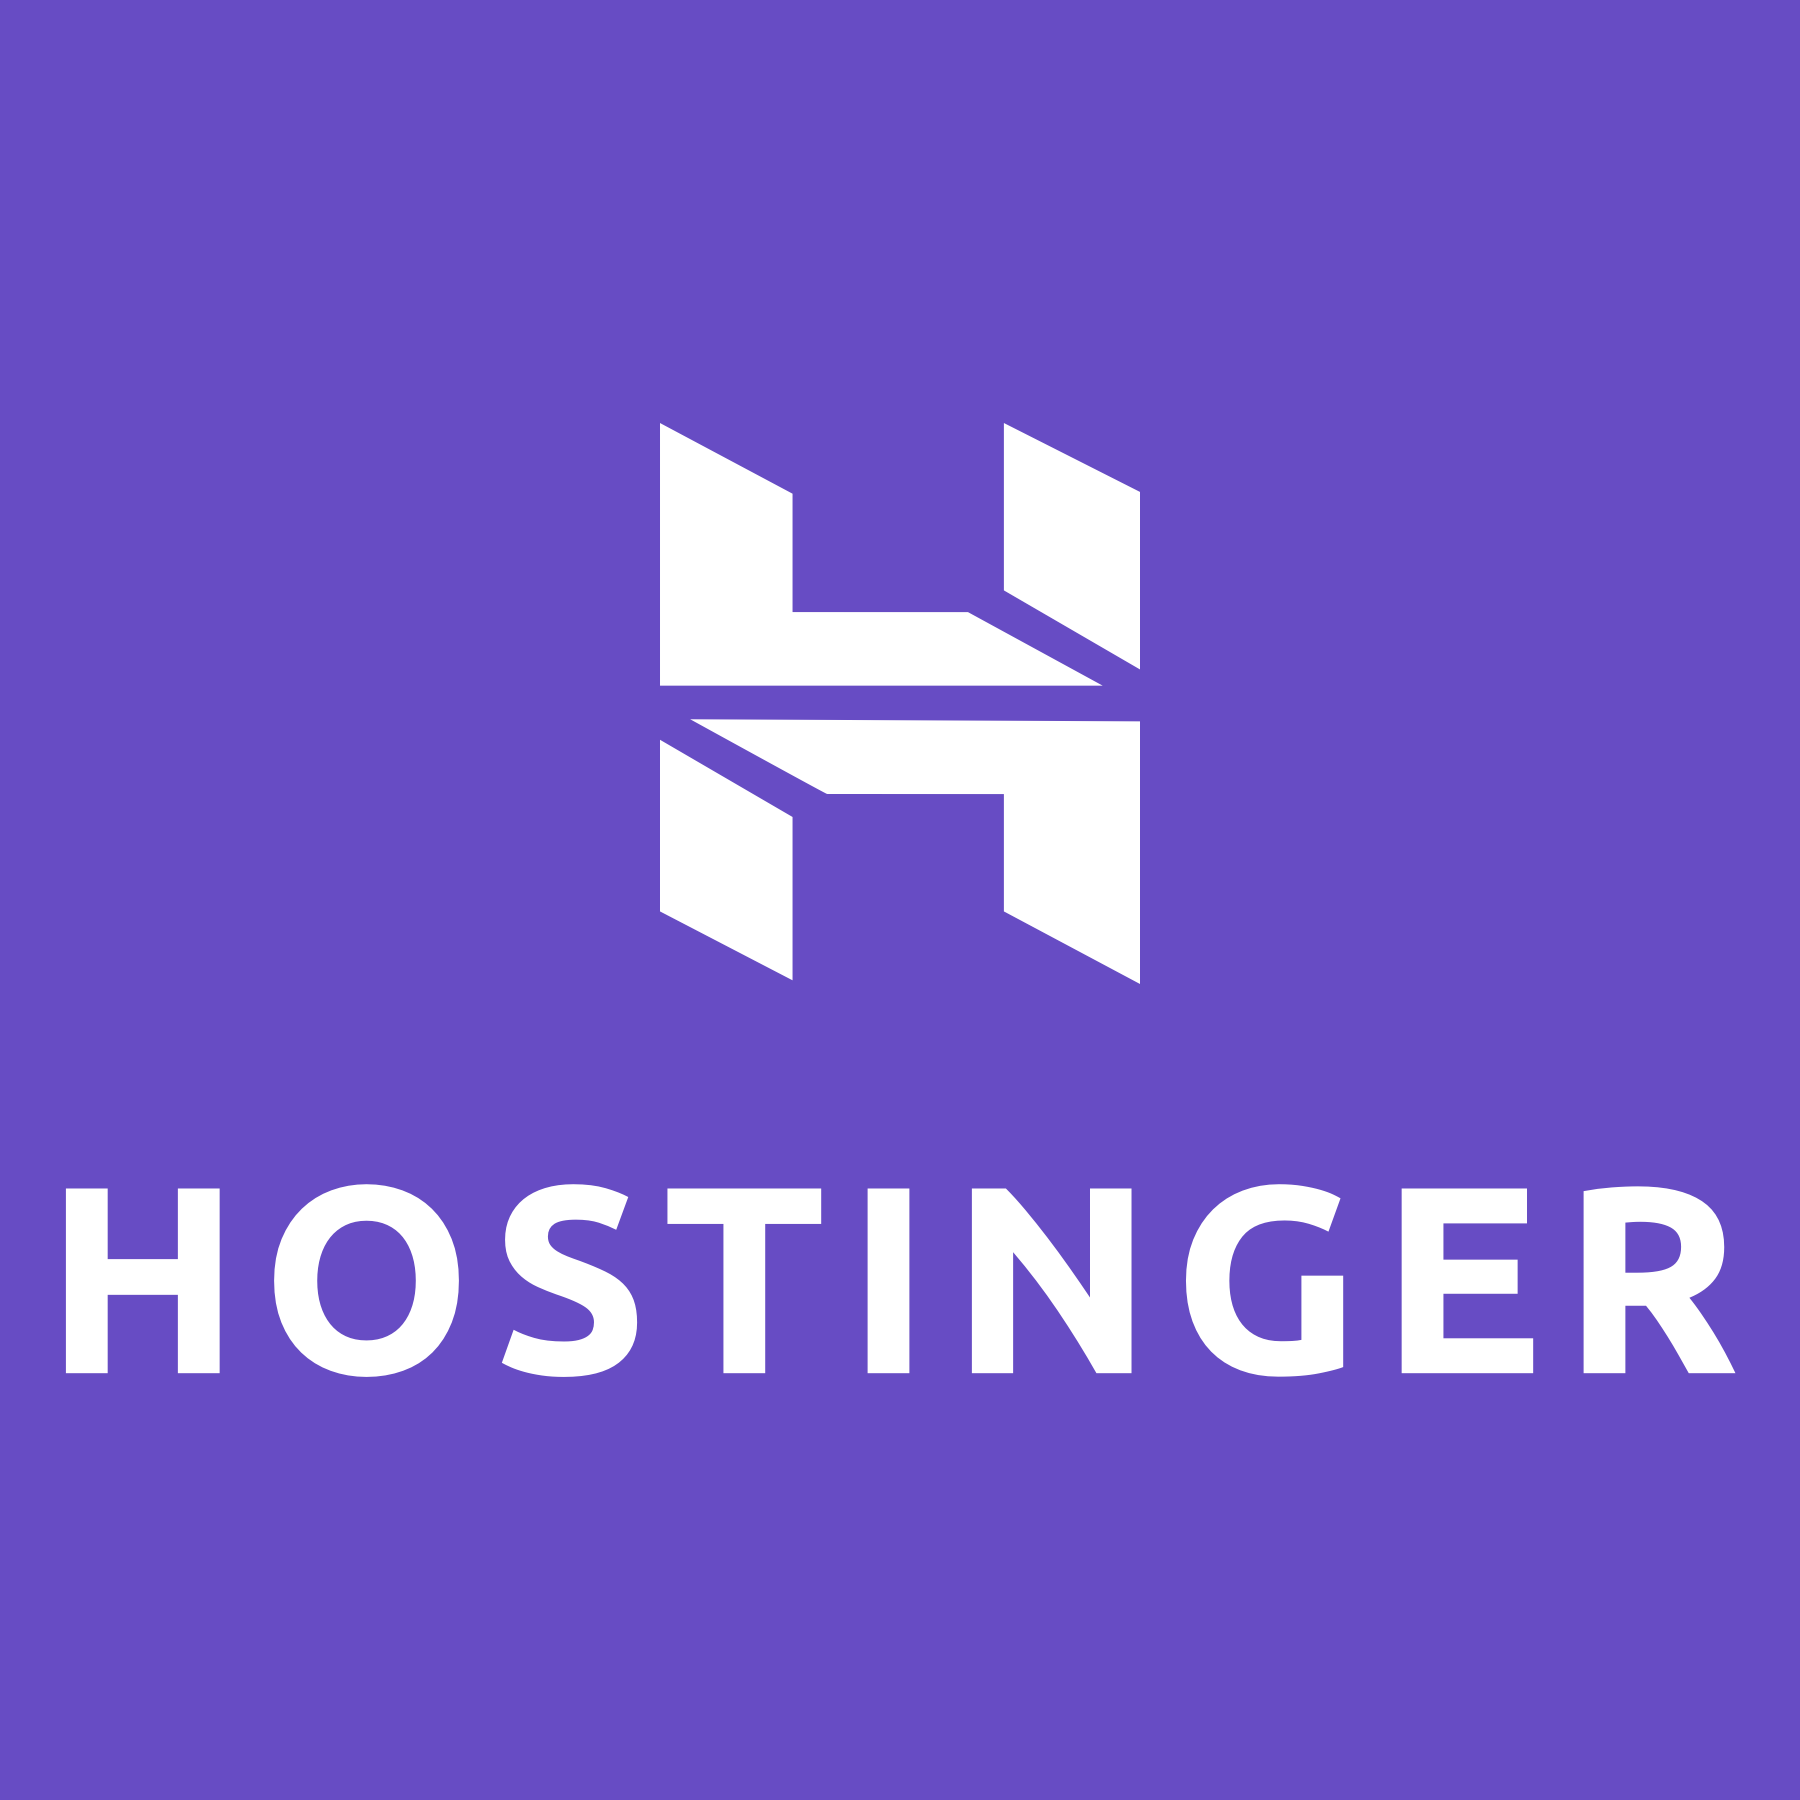 Hostinger Coupon Codes